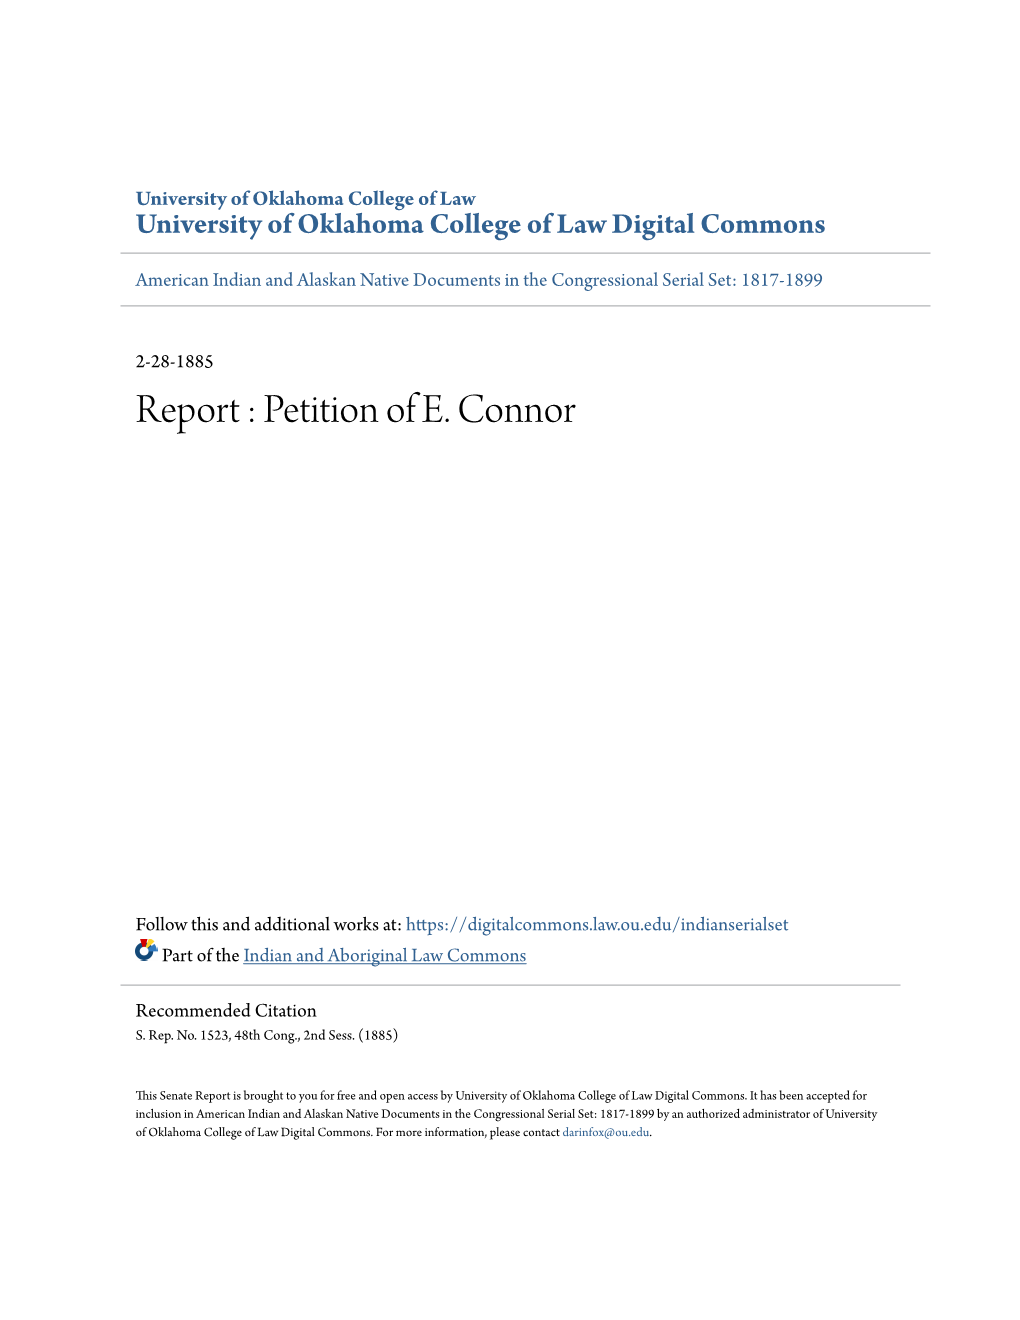 Report : Petition of E. Connor